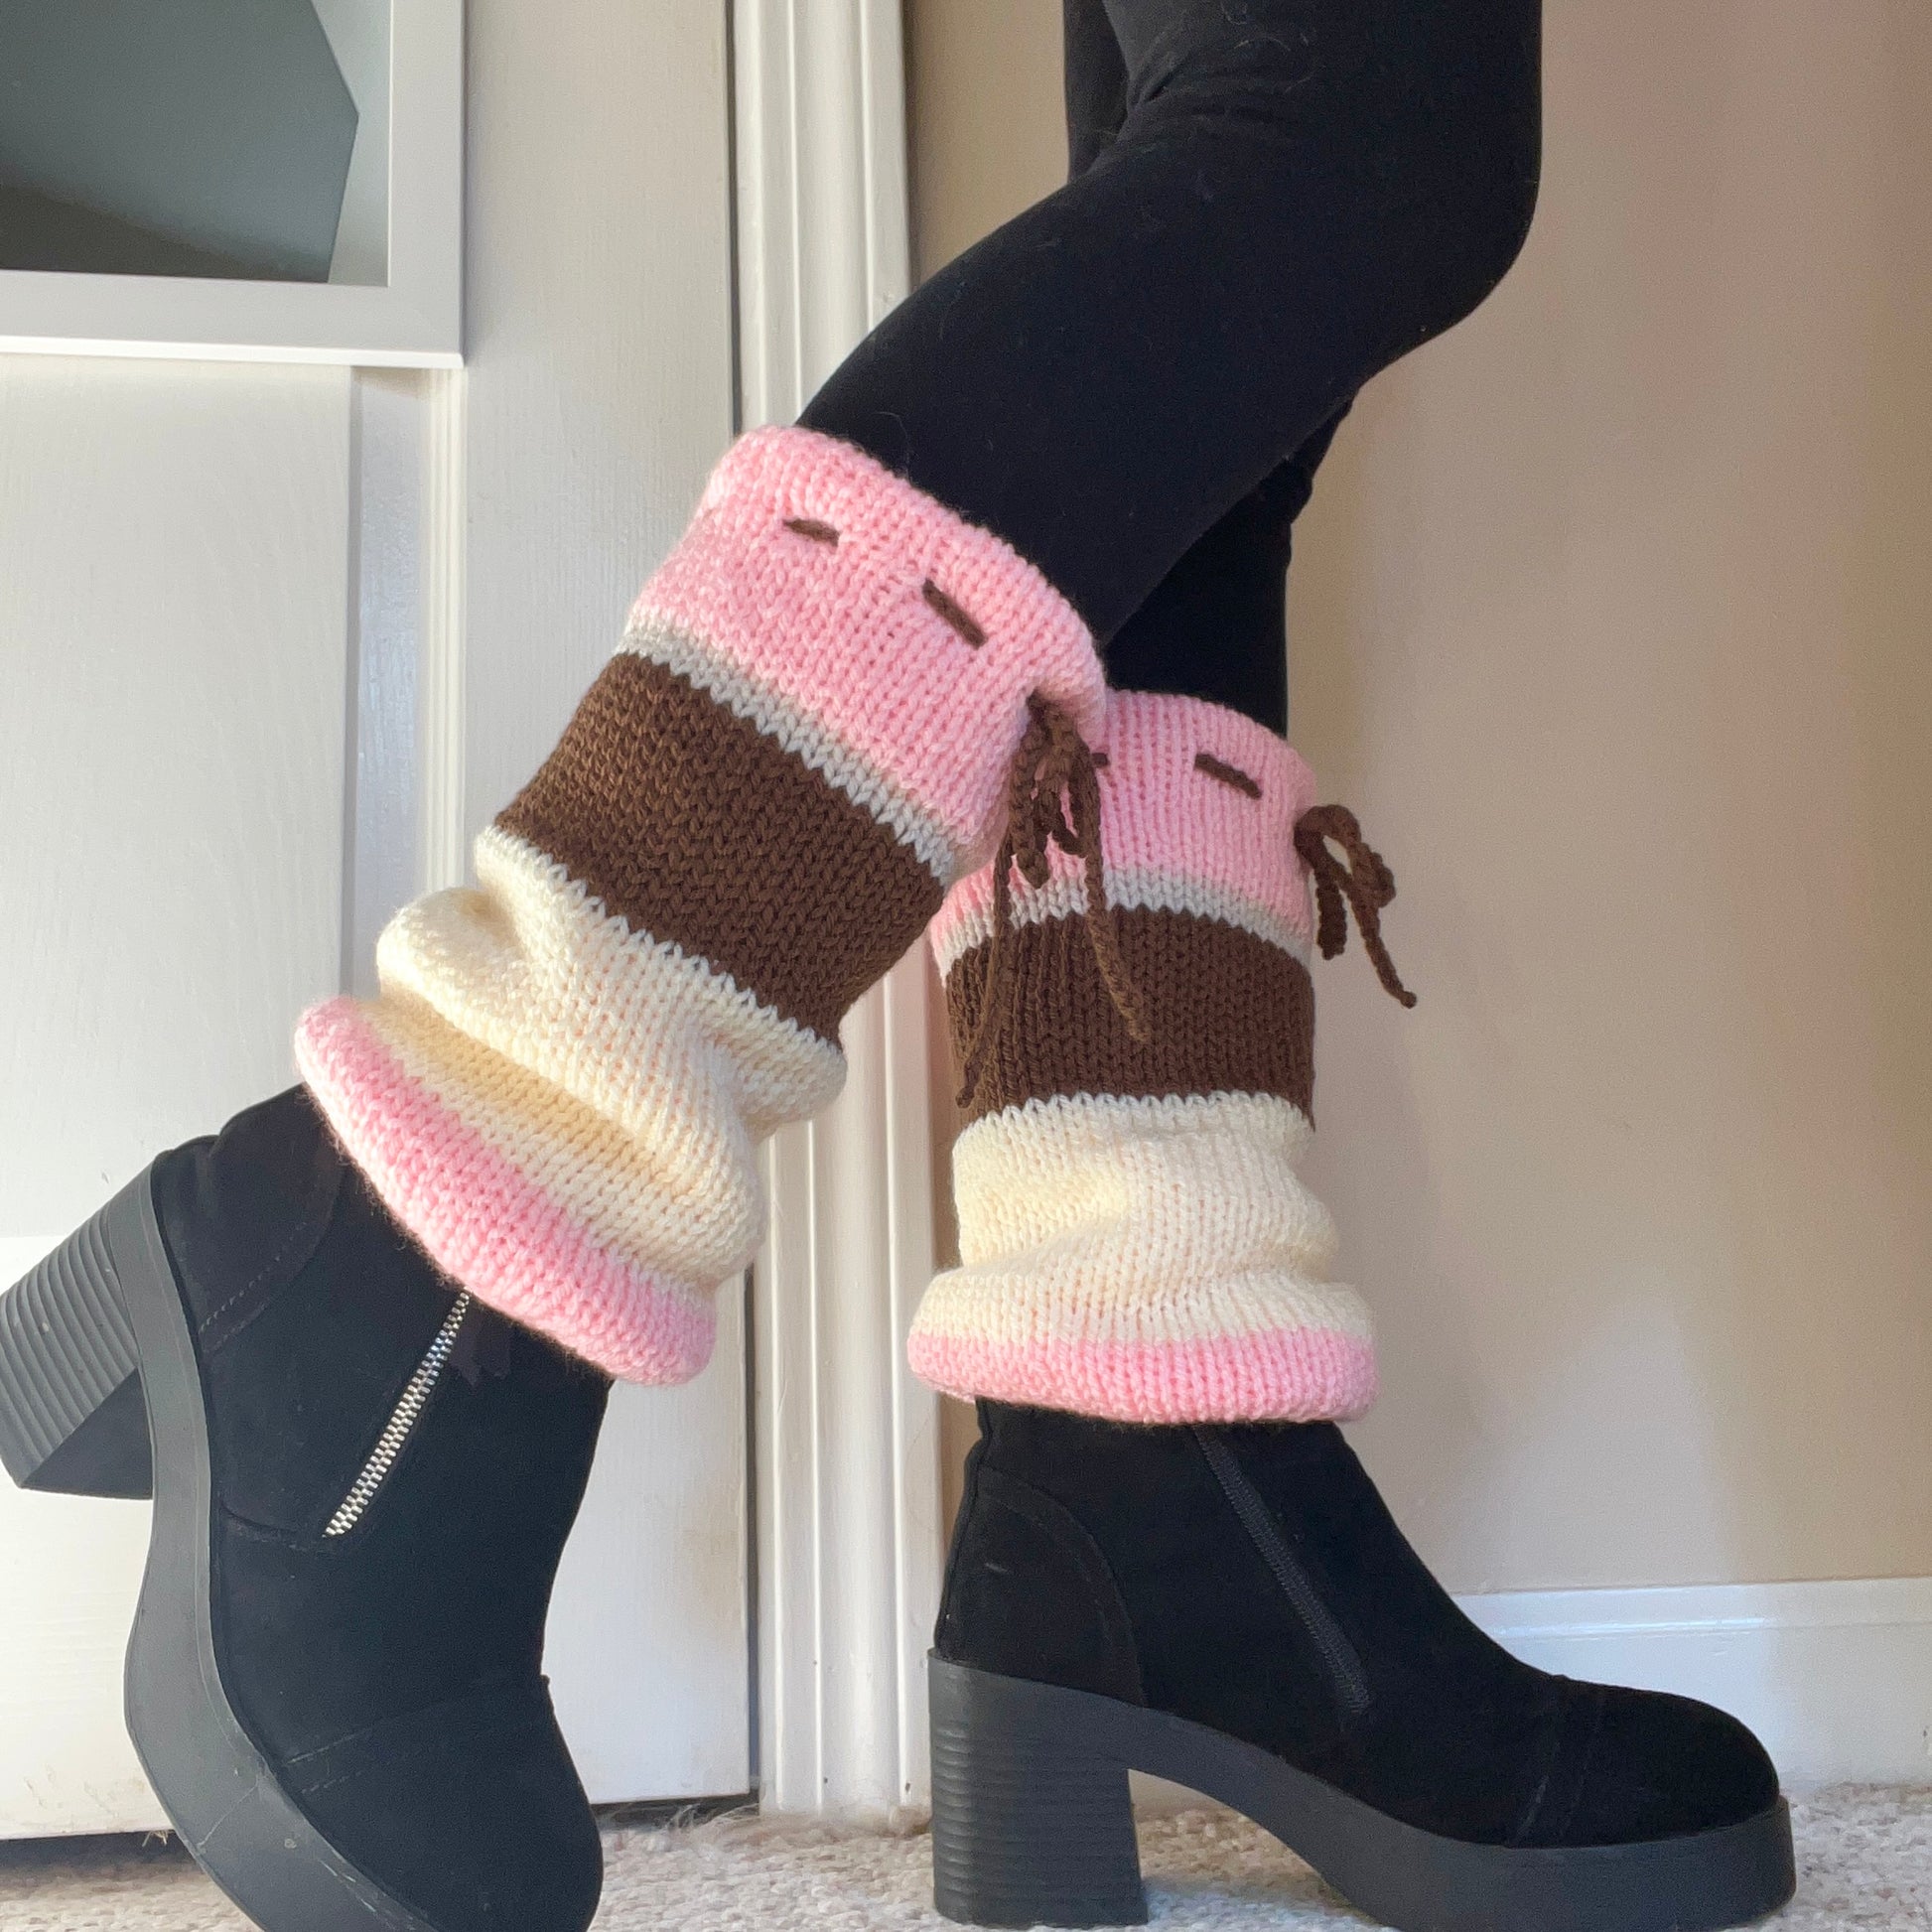 Neapolitan knit leg warmers